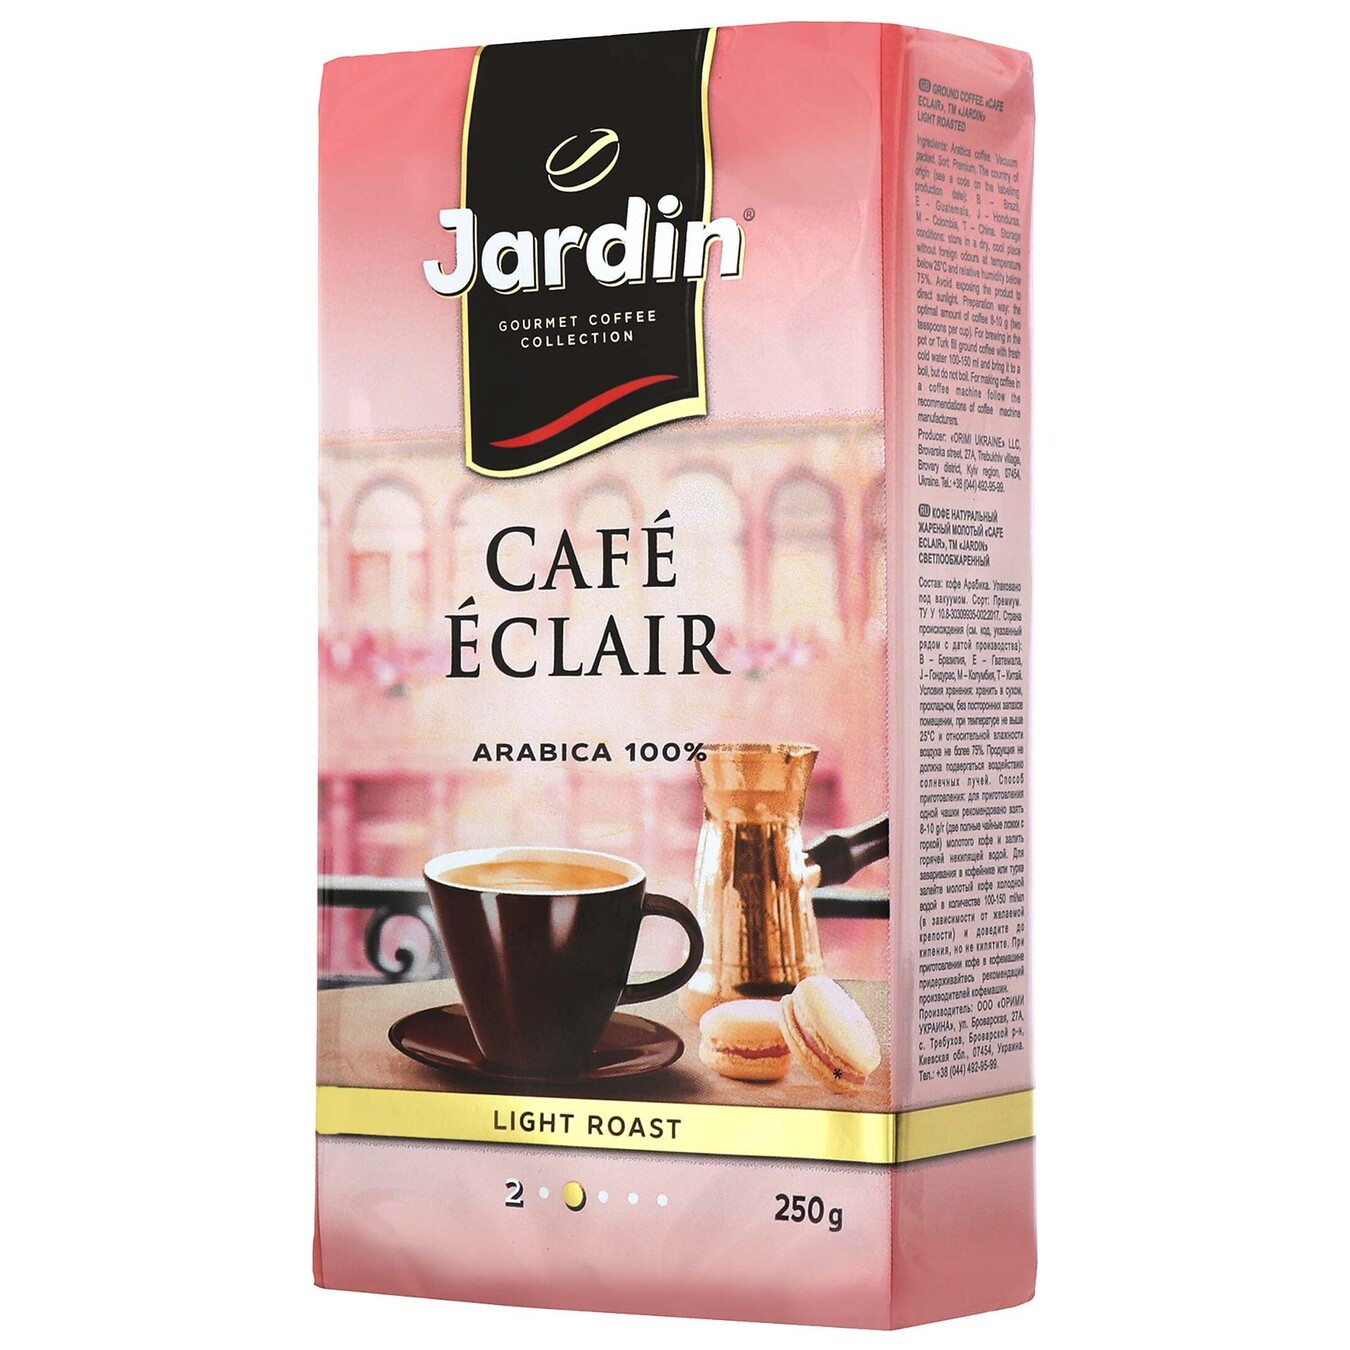 Jardin Cafe Eclair Ground Coffee 250g 2